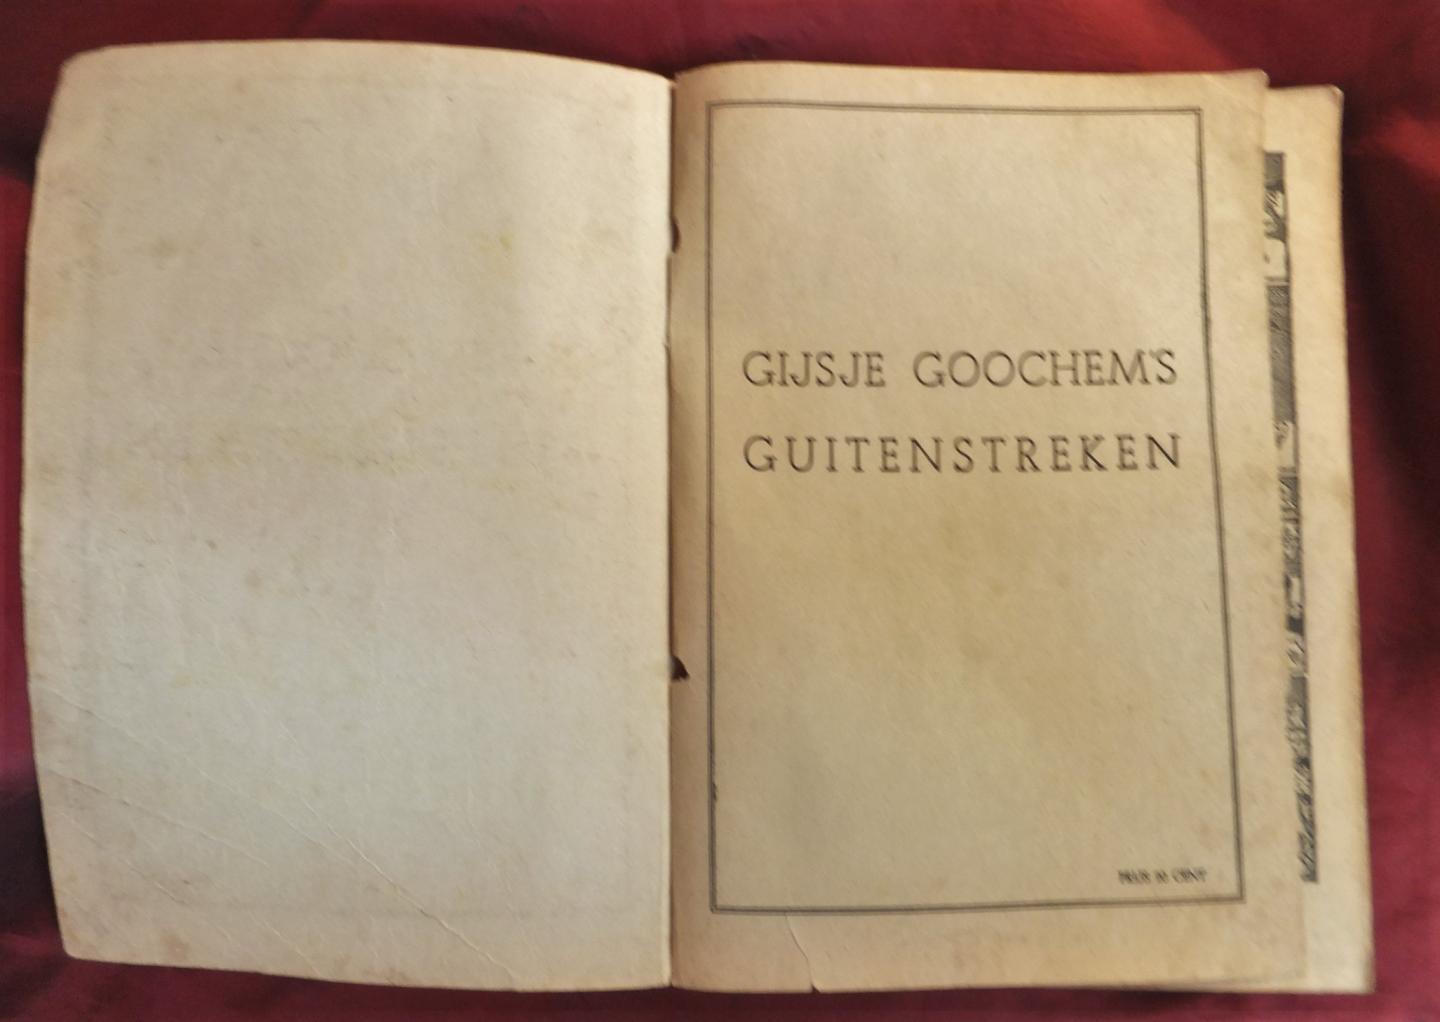 Grosman, Jacobus - Gijsje Goochem's guitenstreken [1.dr]